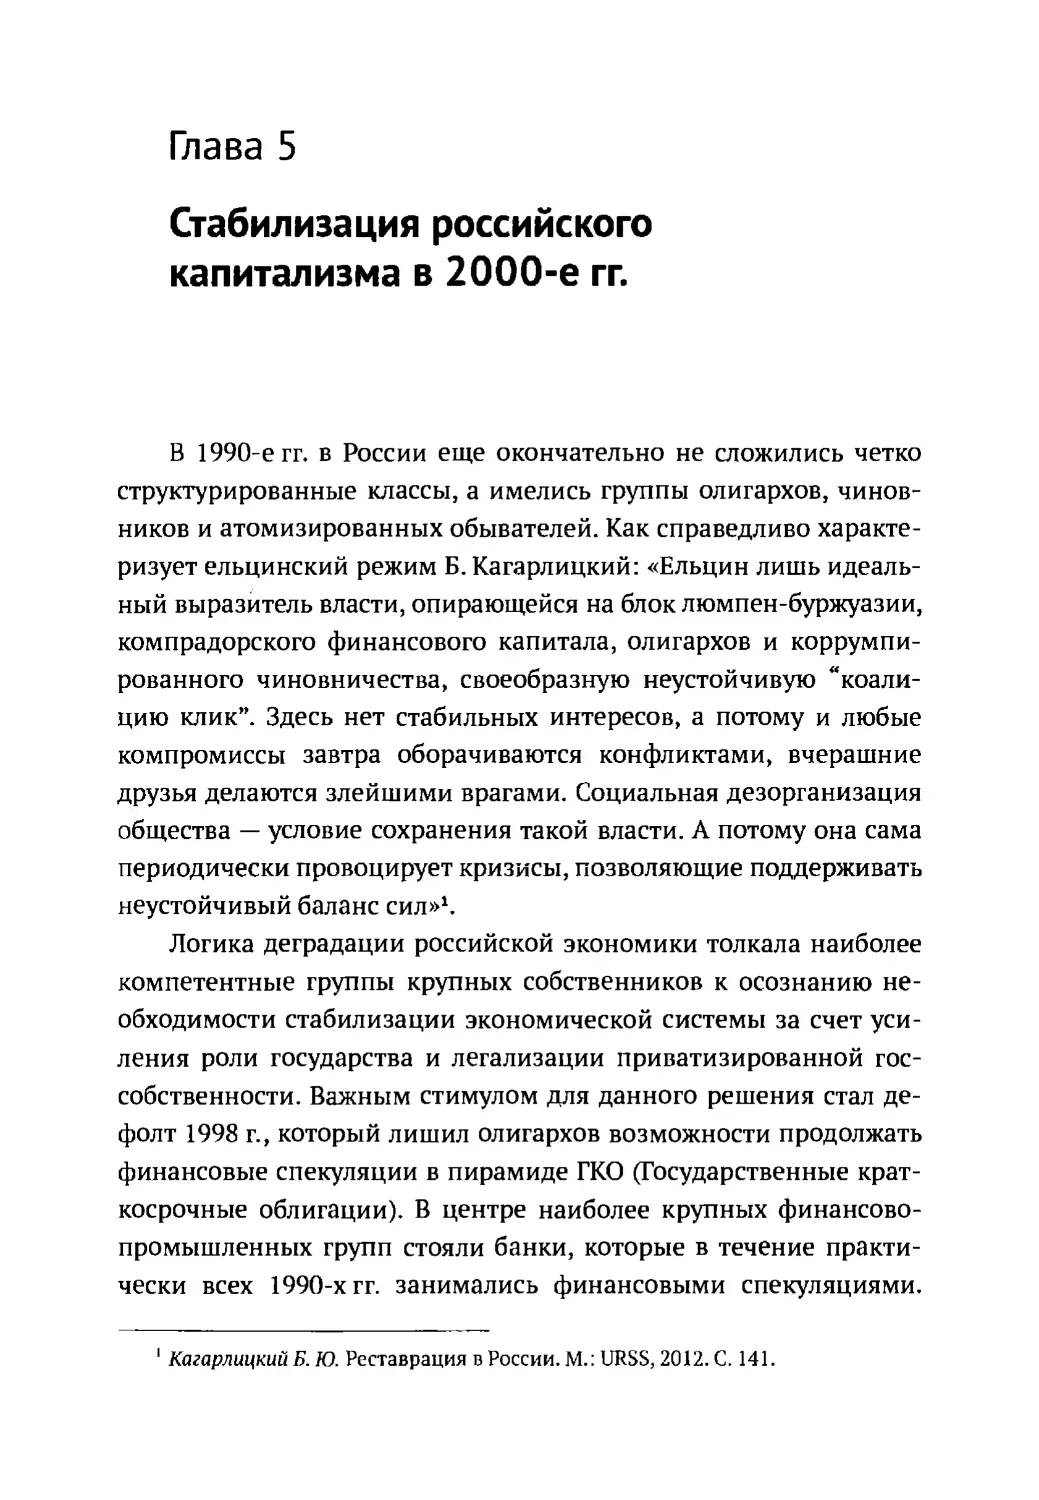 Глава 5. Стабилизация российского капитализма в 2000-е гг